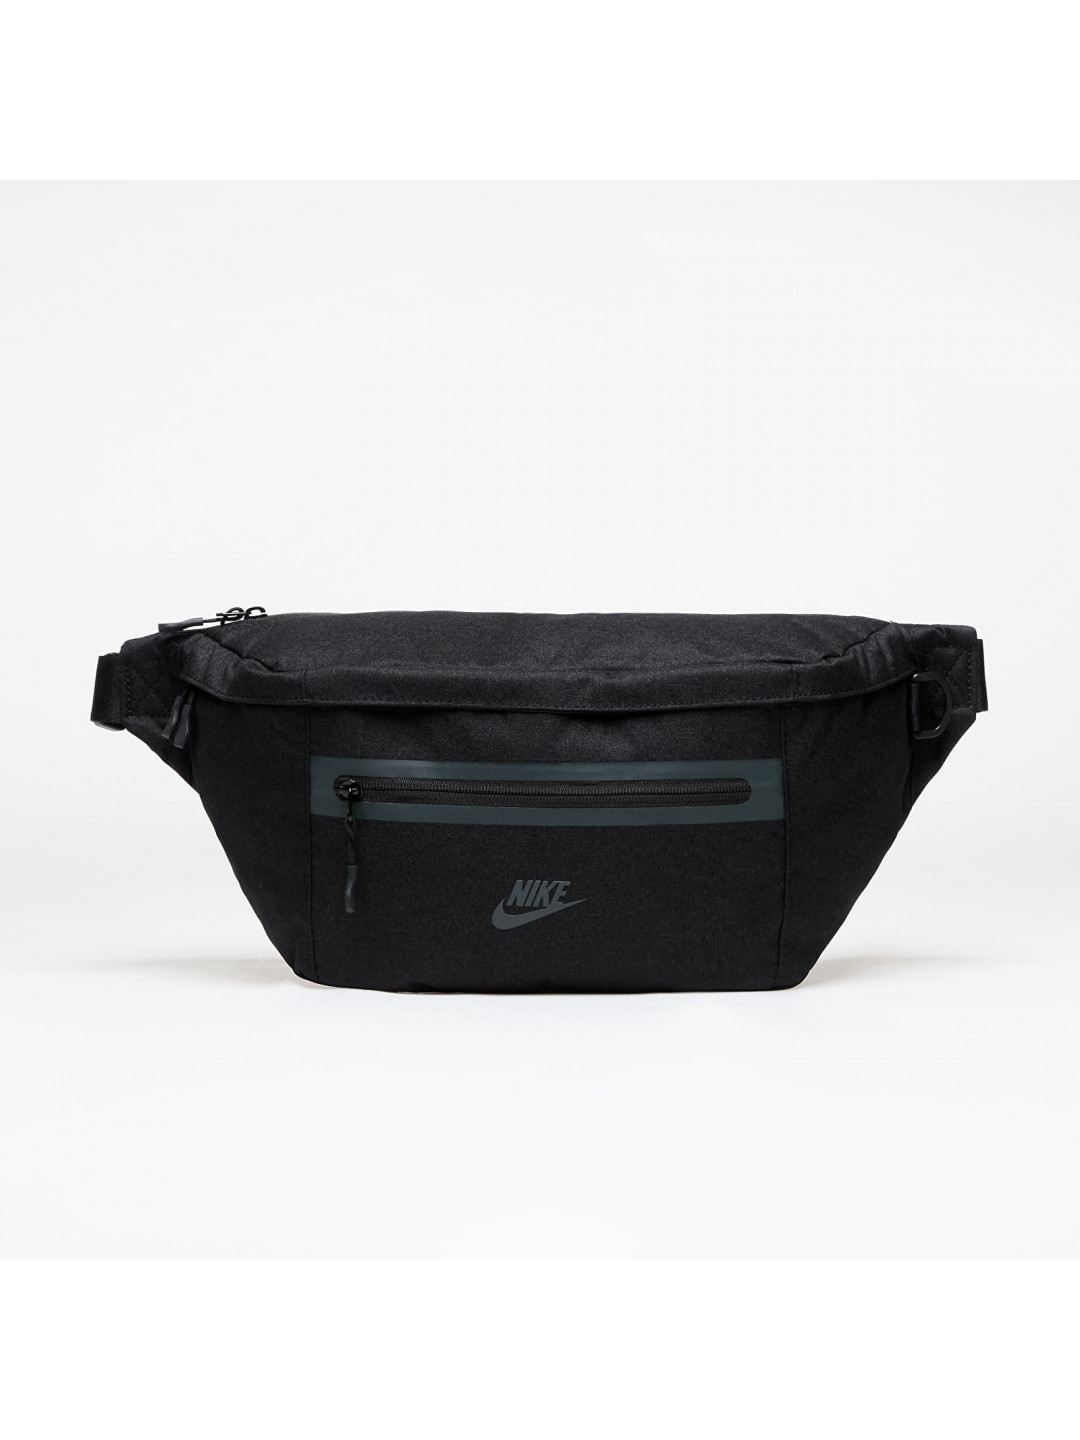 Nike Elemental Premium Fanny Pack Black Black Anthracite